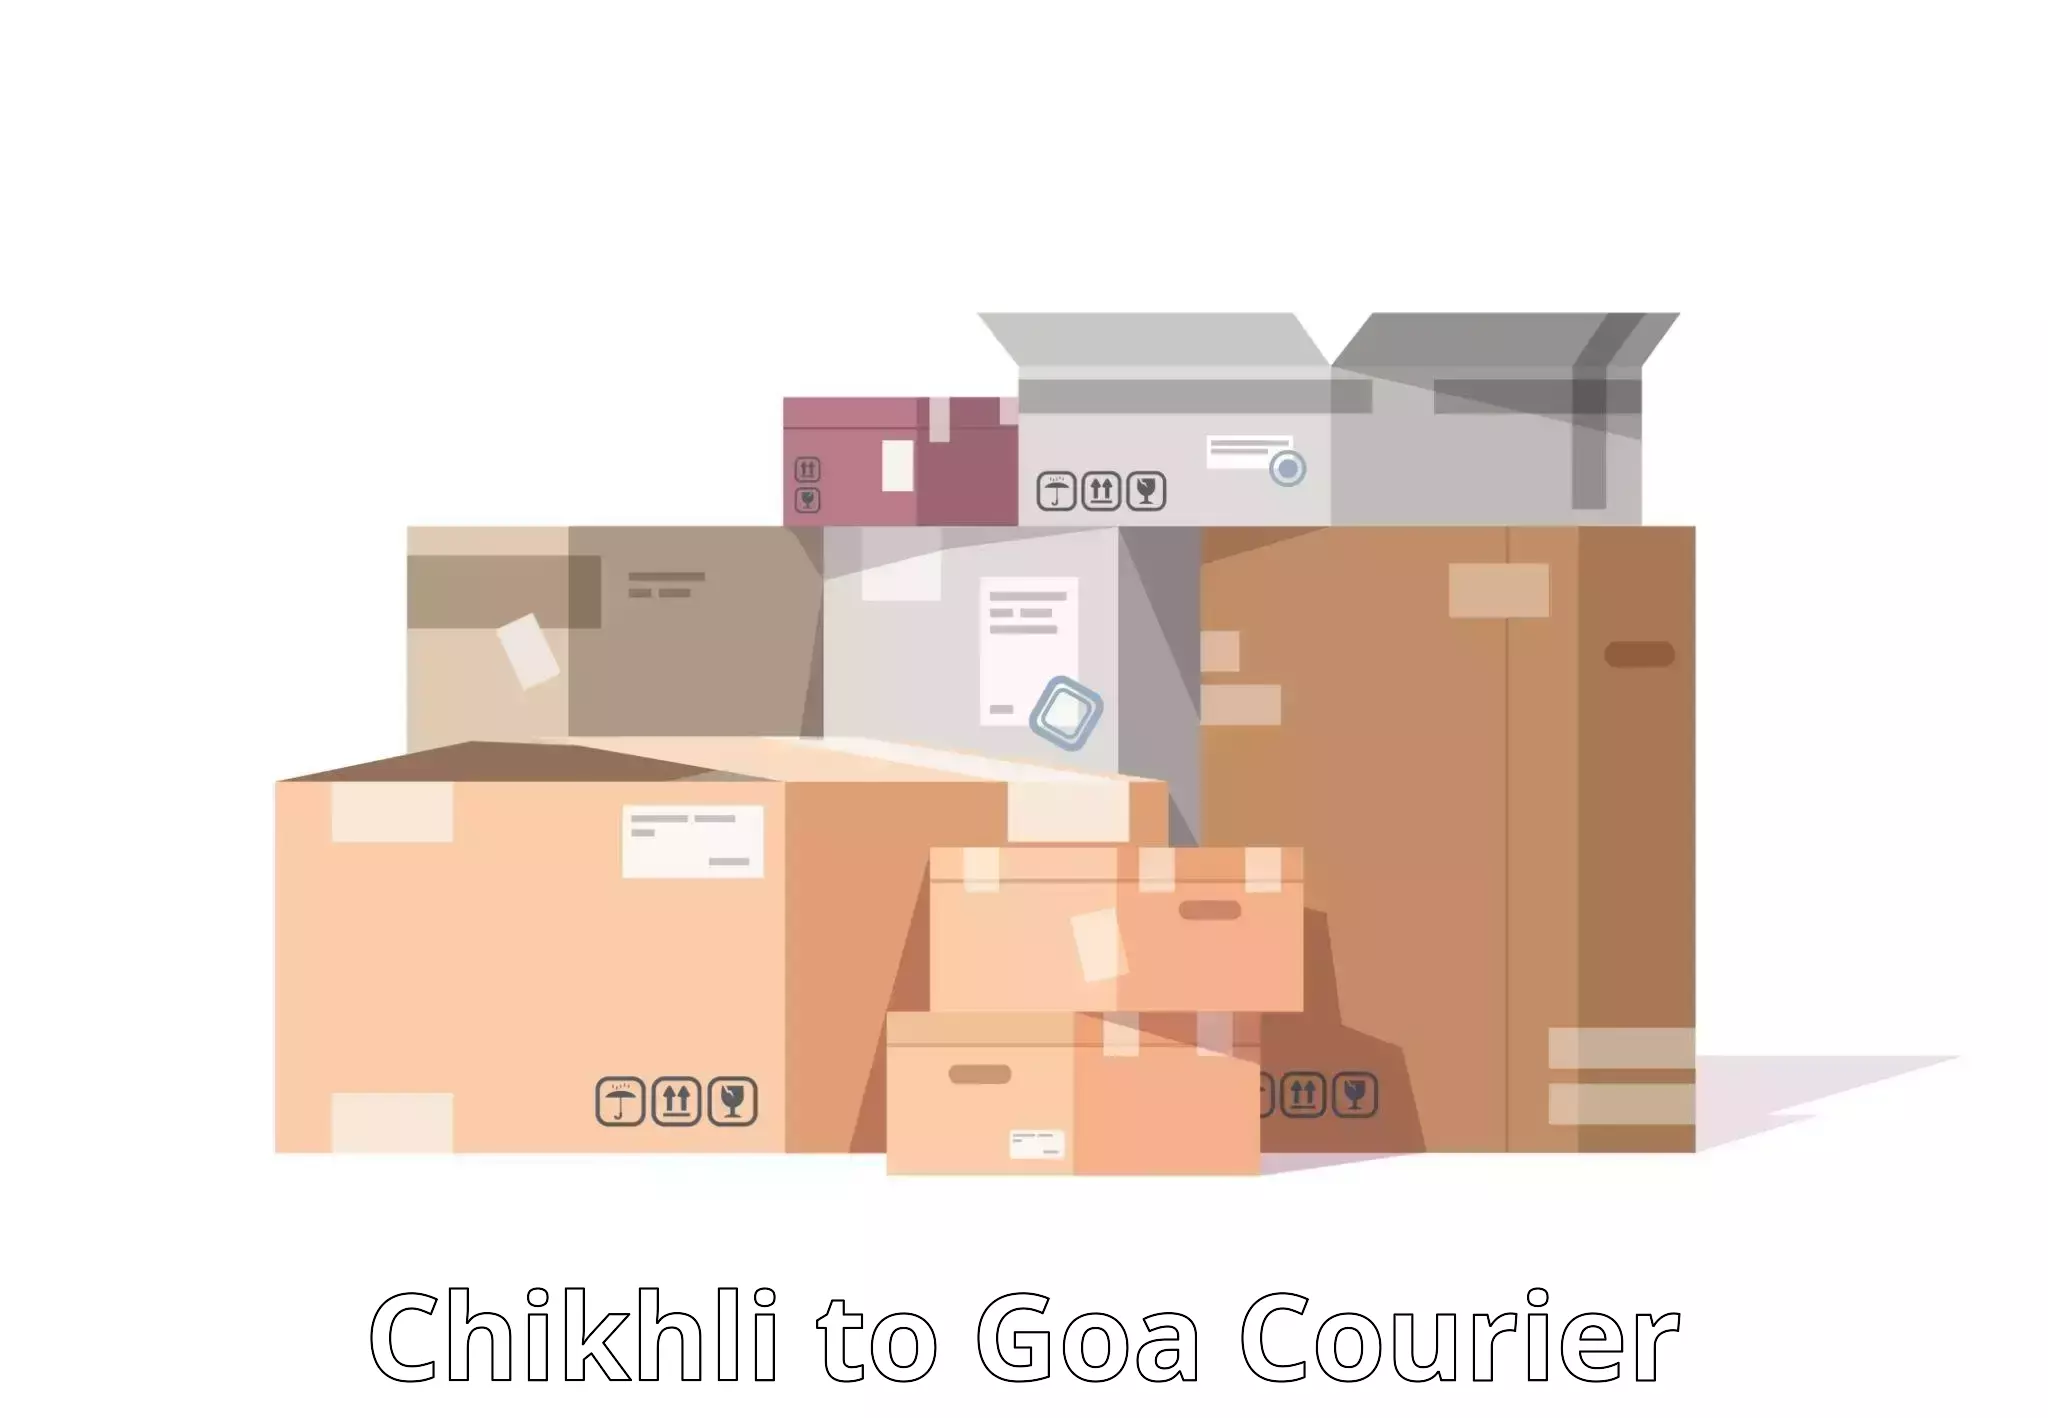 Enhanced tracking features Chikhli to Goa